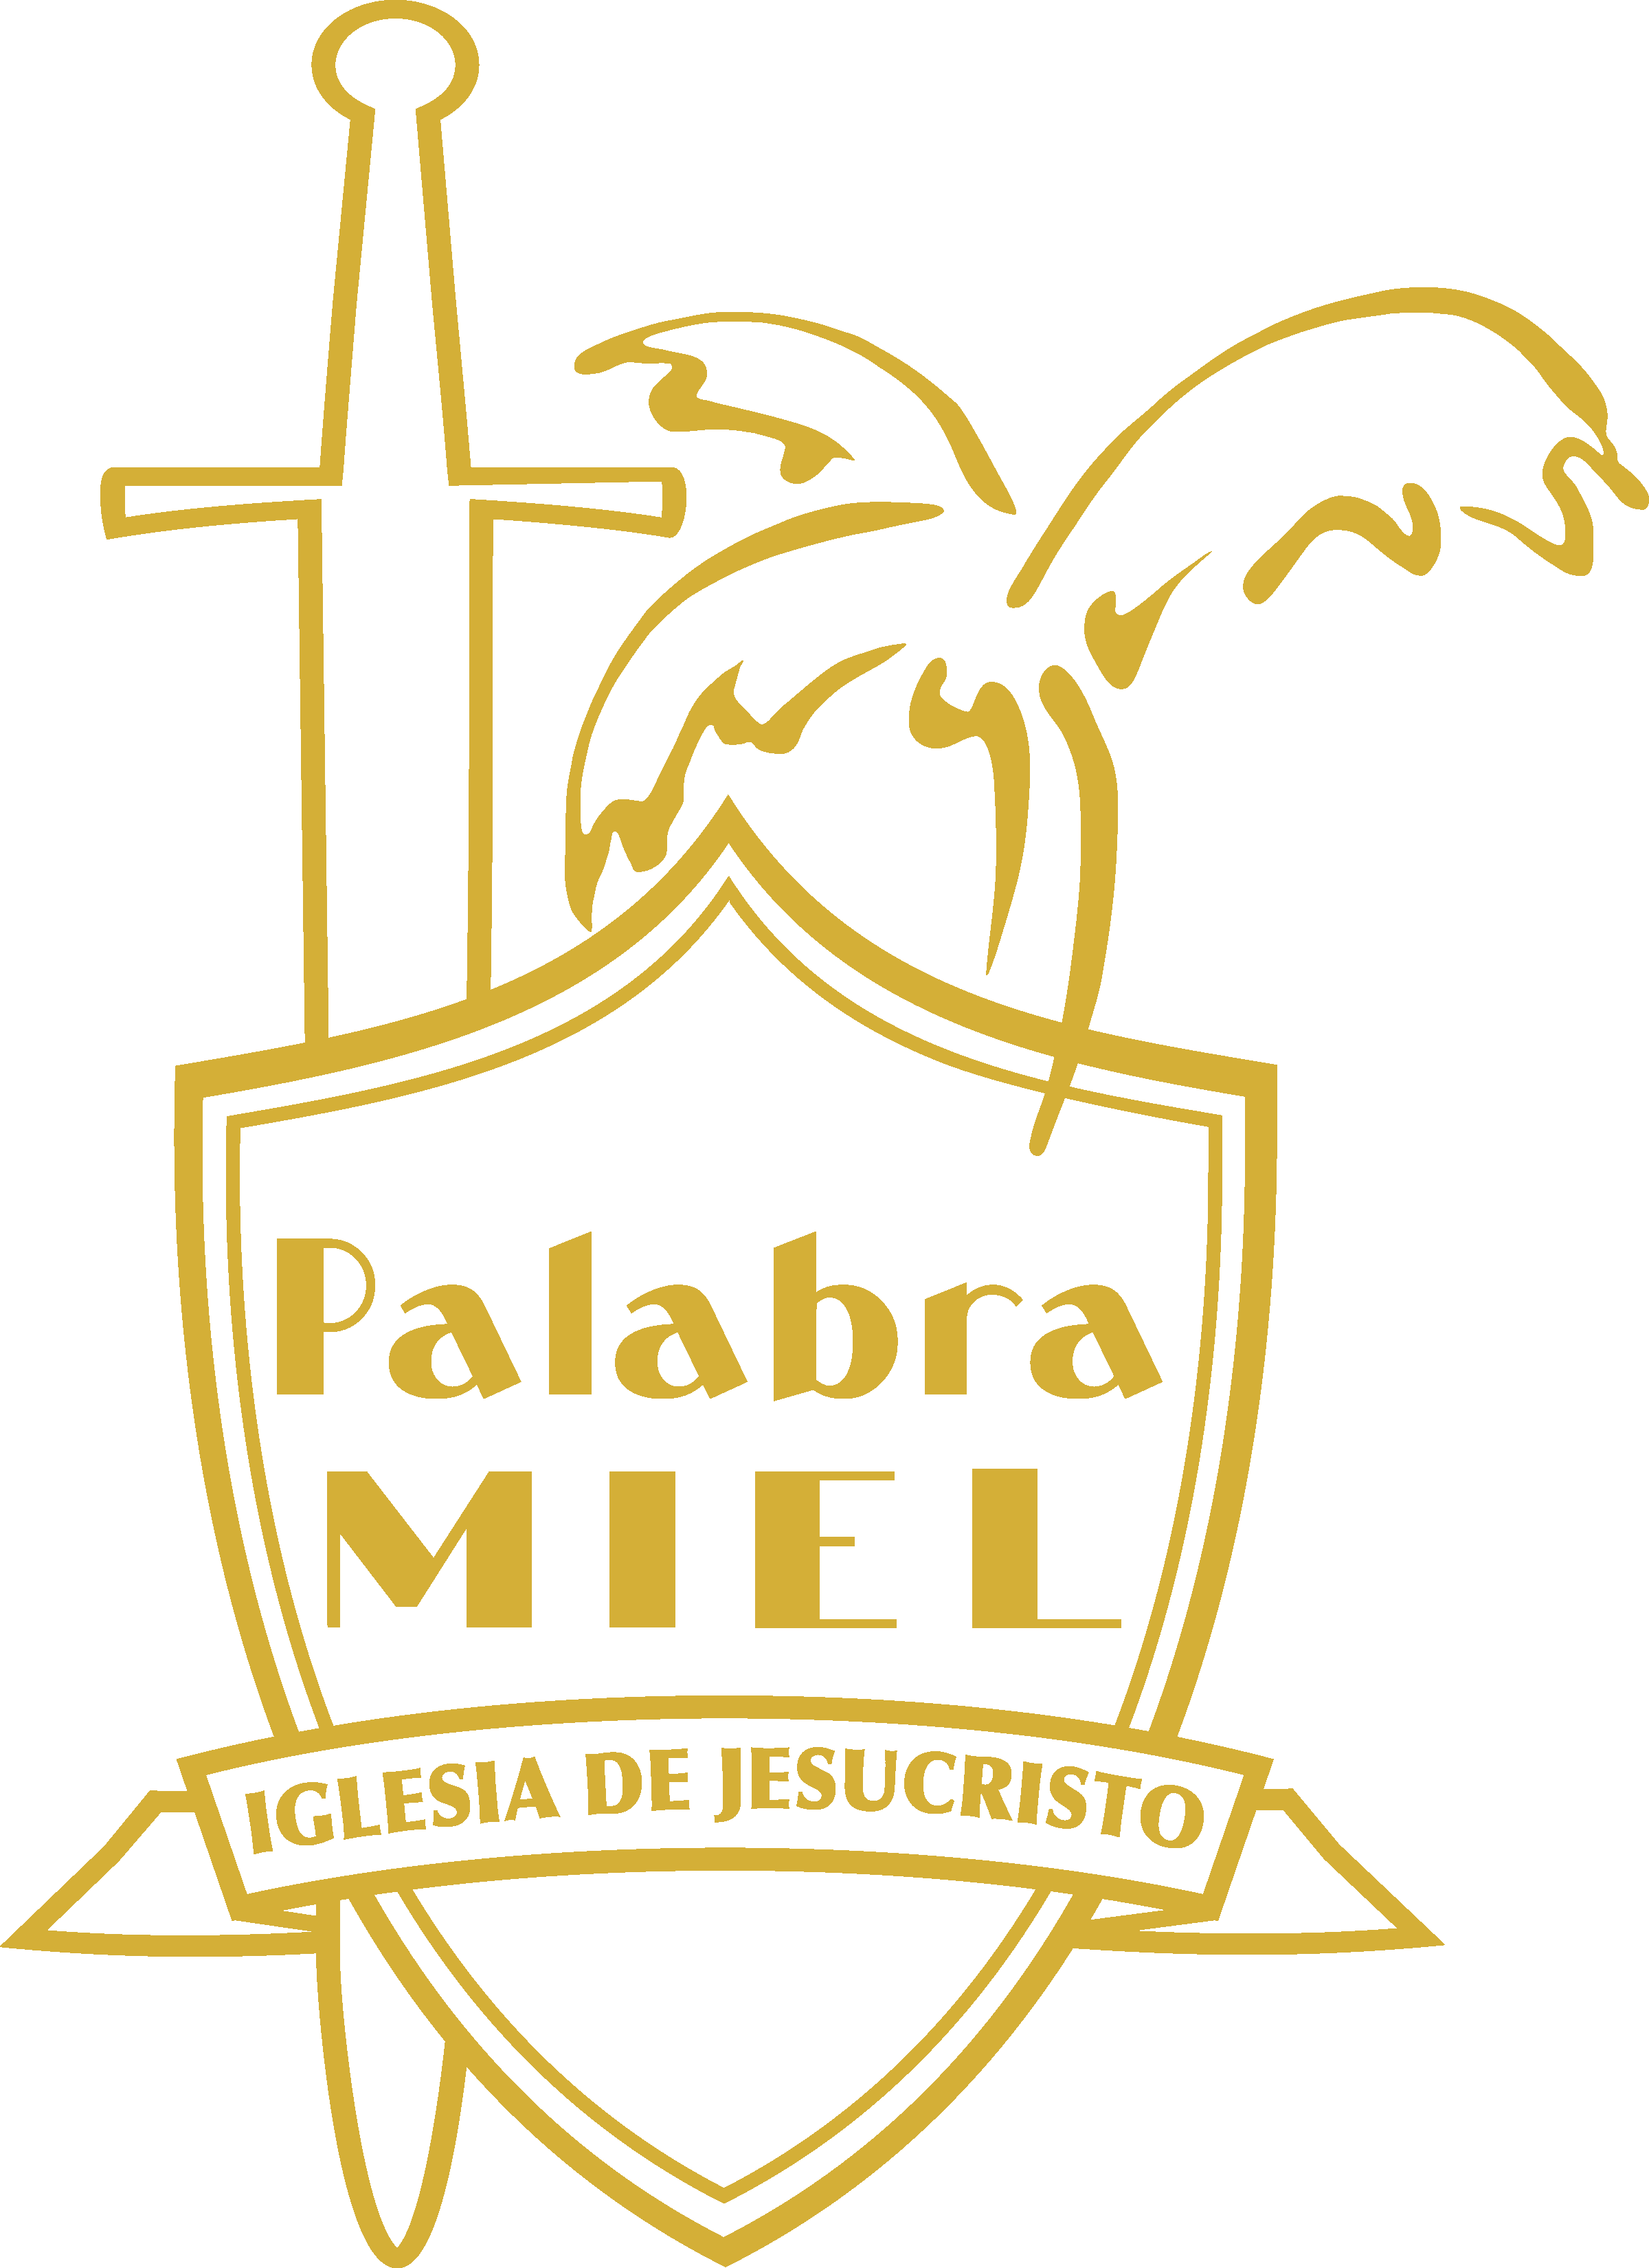 Miel Logo De Jesucristo Palabra Church Iglesia PNG Image